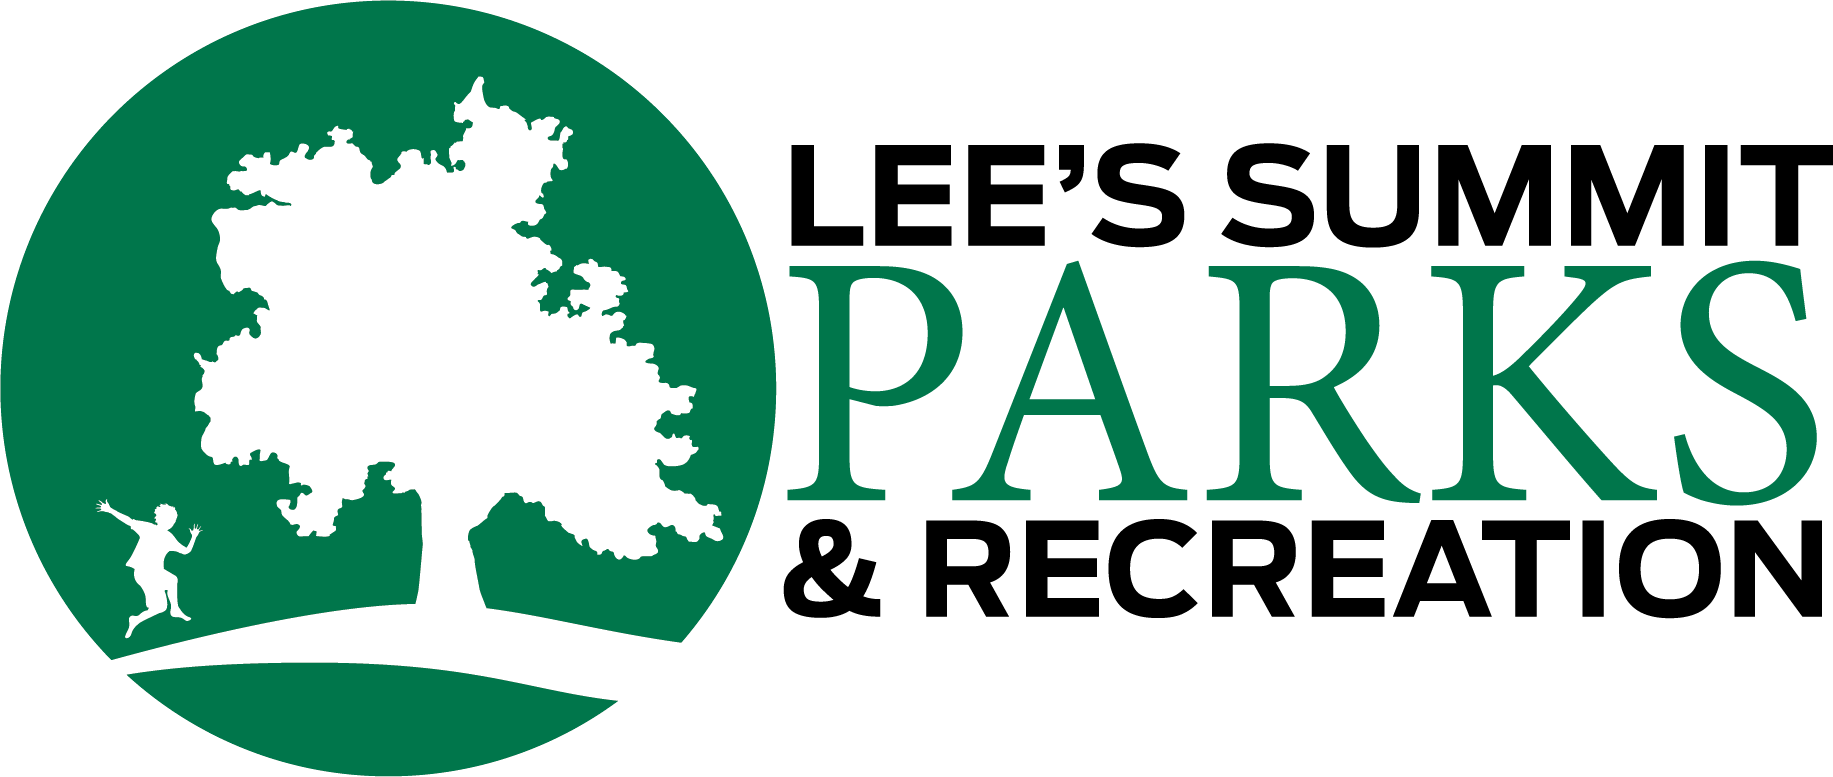 Lee's Summit Parks & Recreation